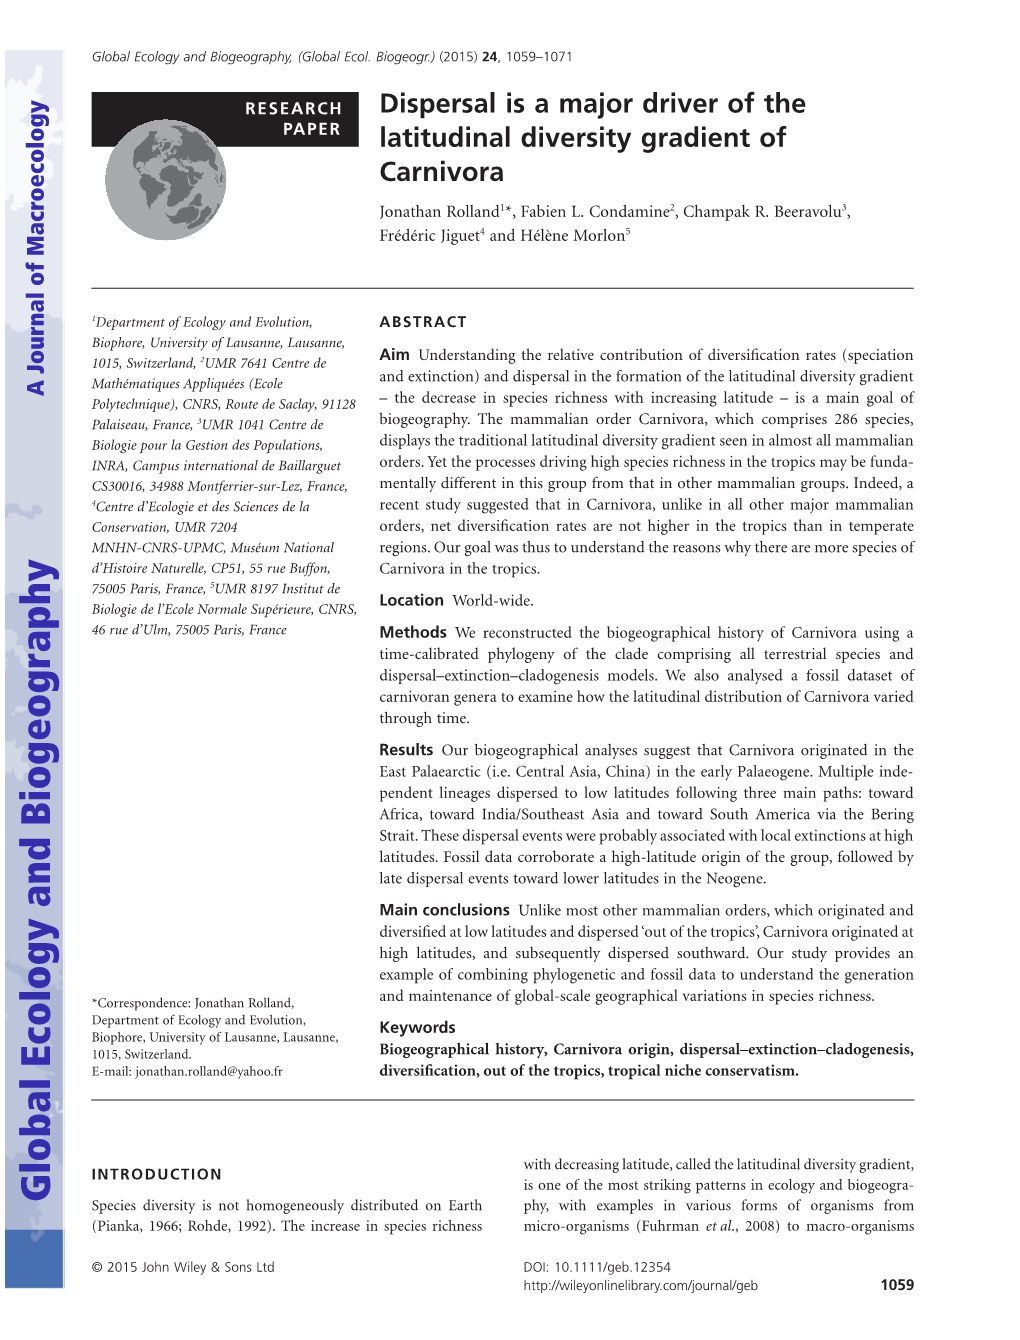 Dispersal Is a Major Driver of the Latitudinal Diversity Gradient of Carnivora